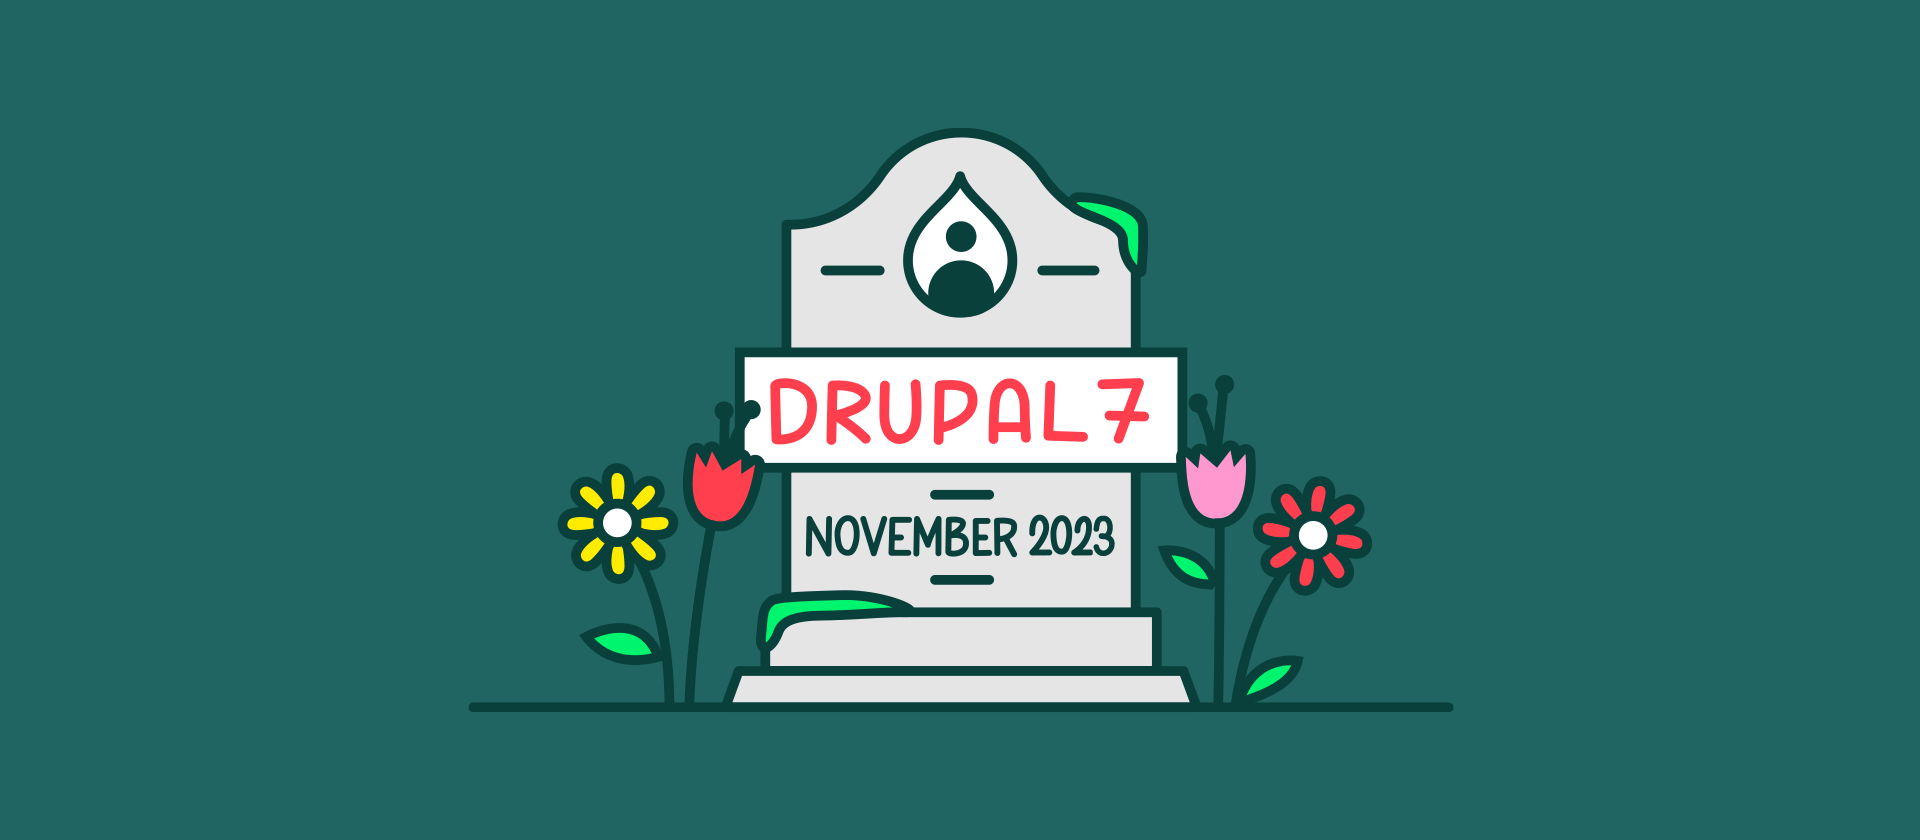 Drupal 7 EOL in november 2023